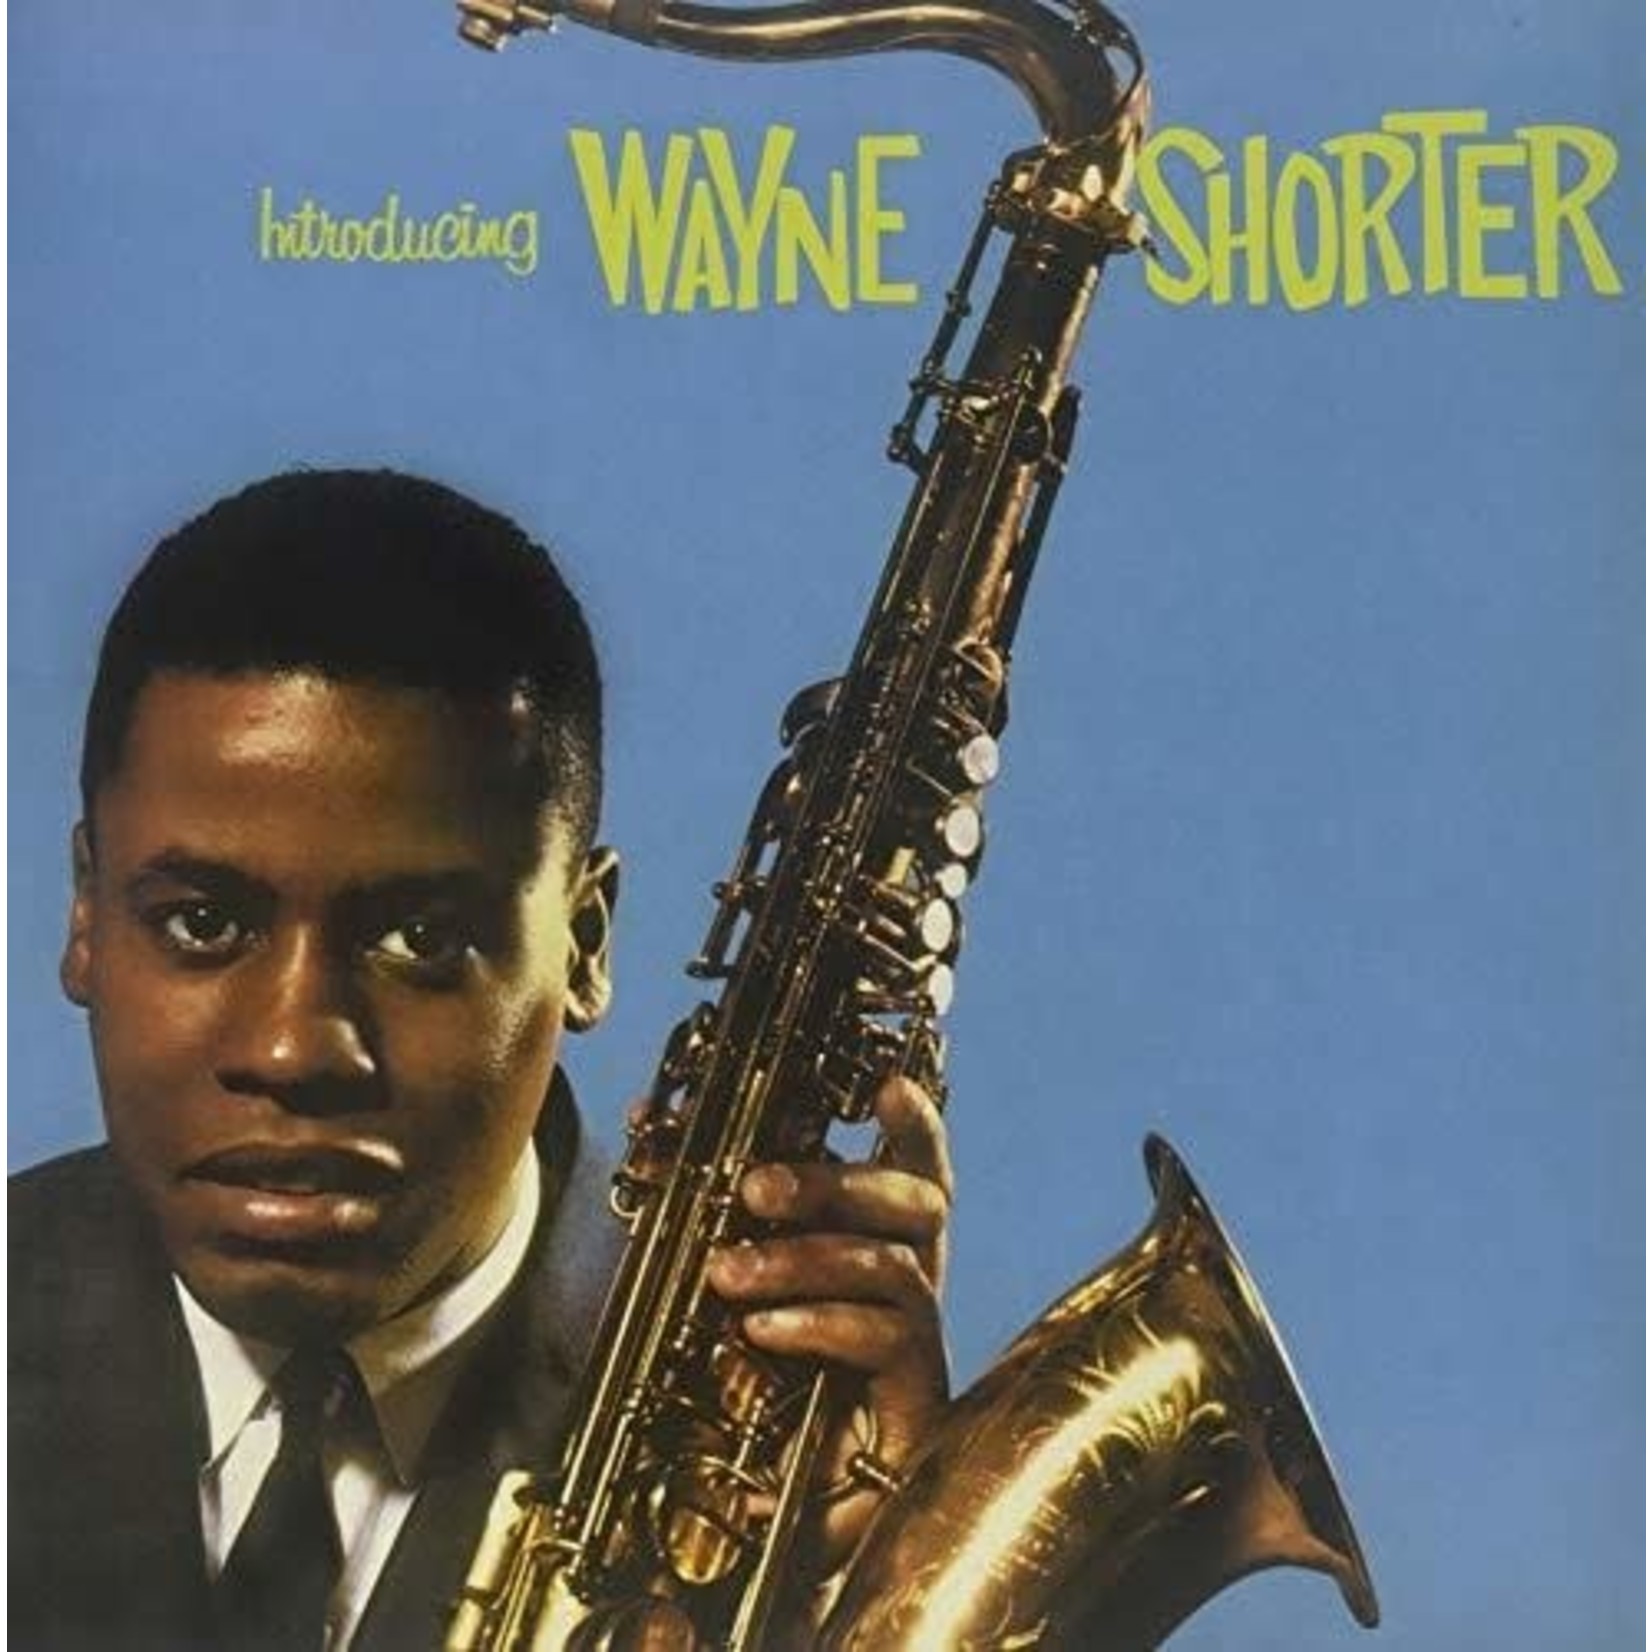 DOL Wayne Shorter - Introducing Wayne Shorter (LP)